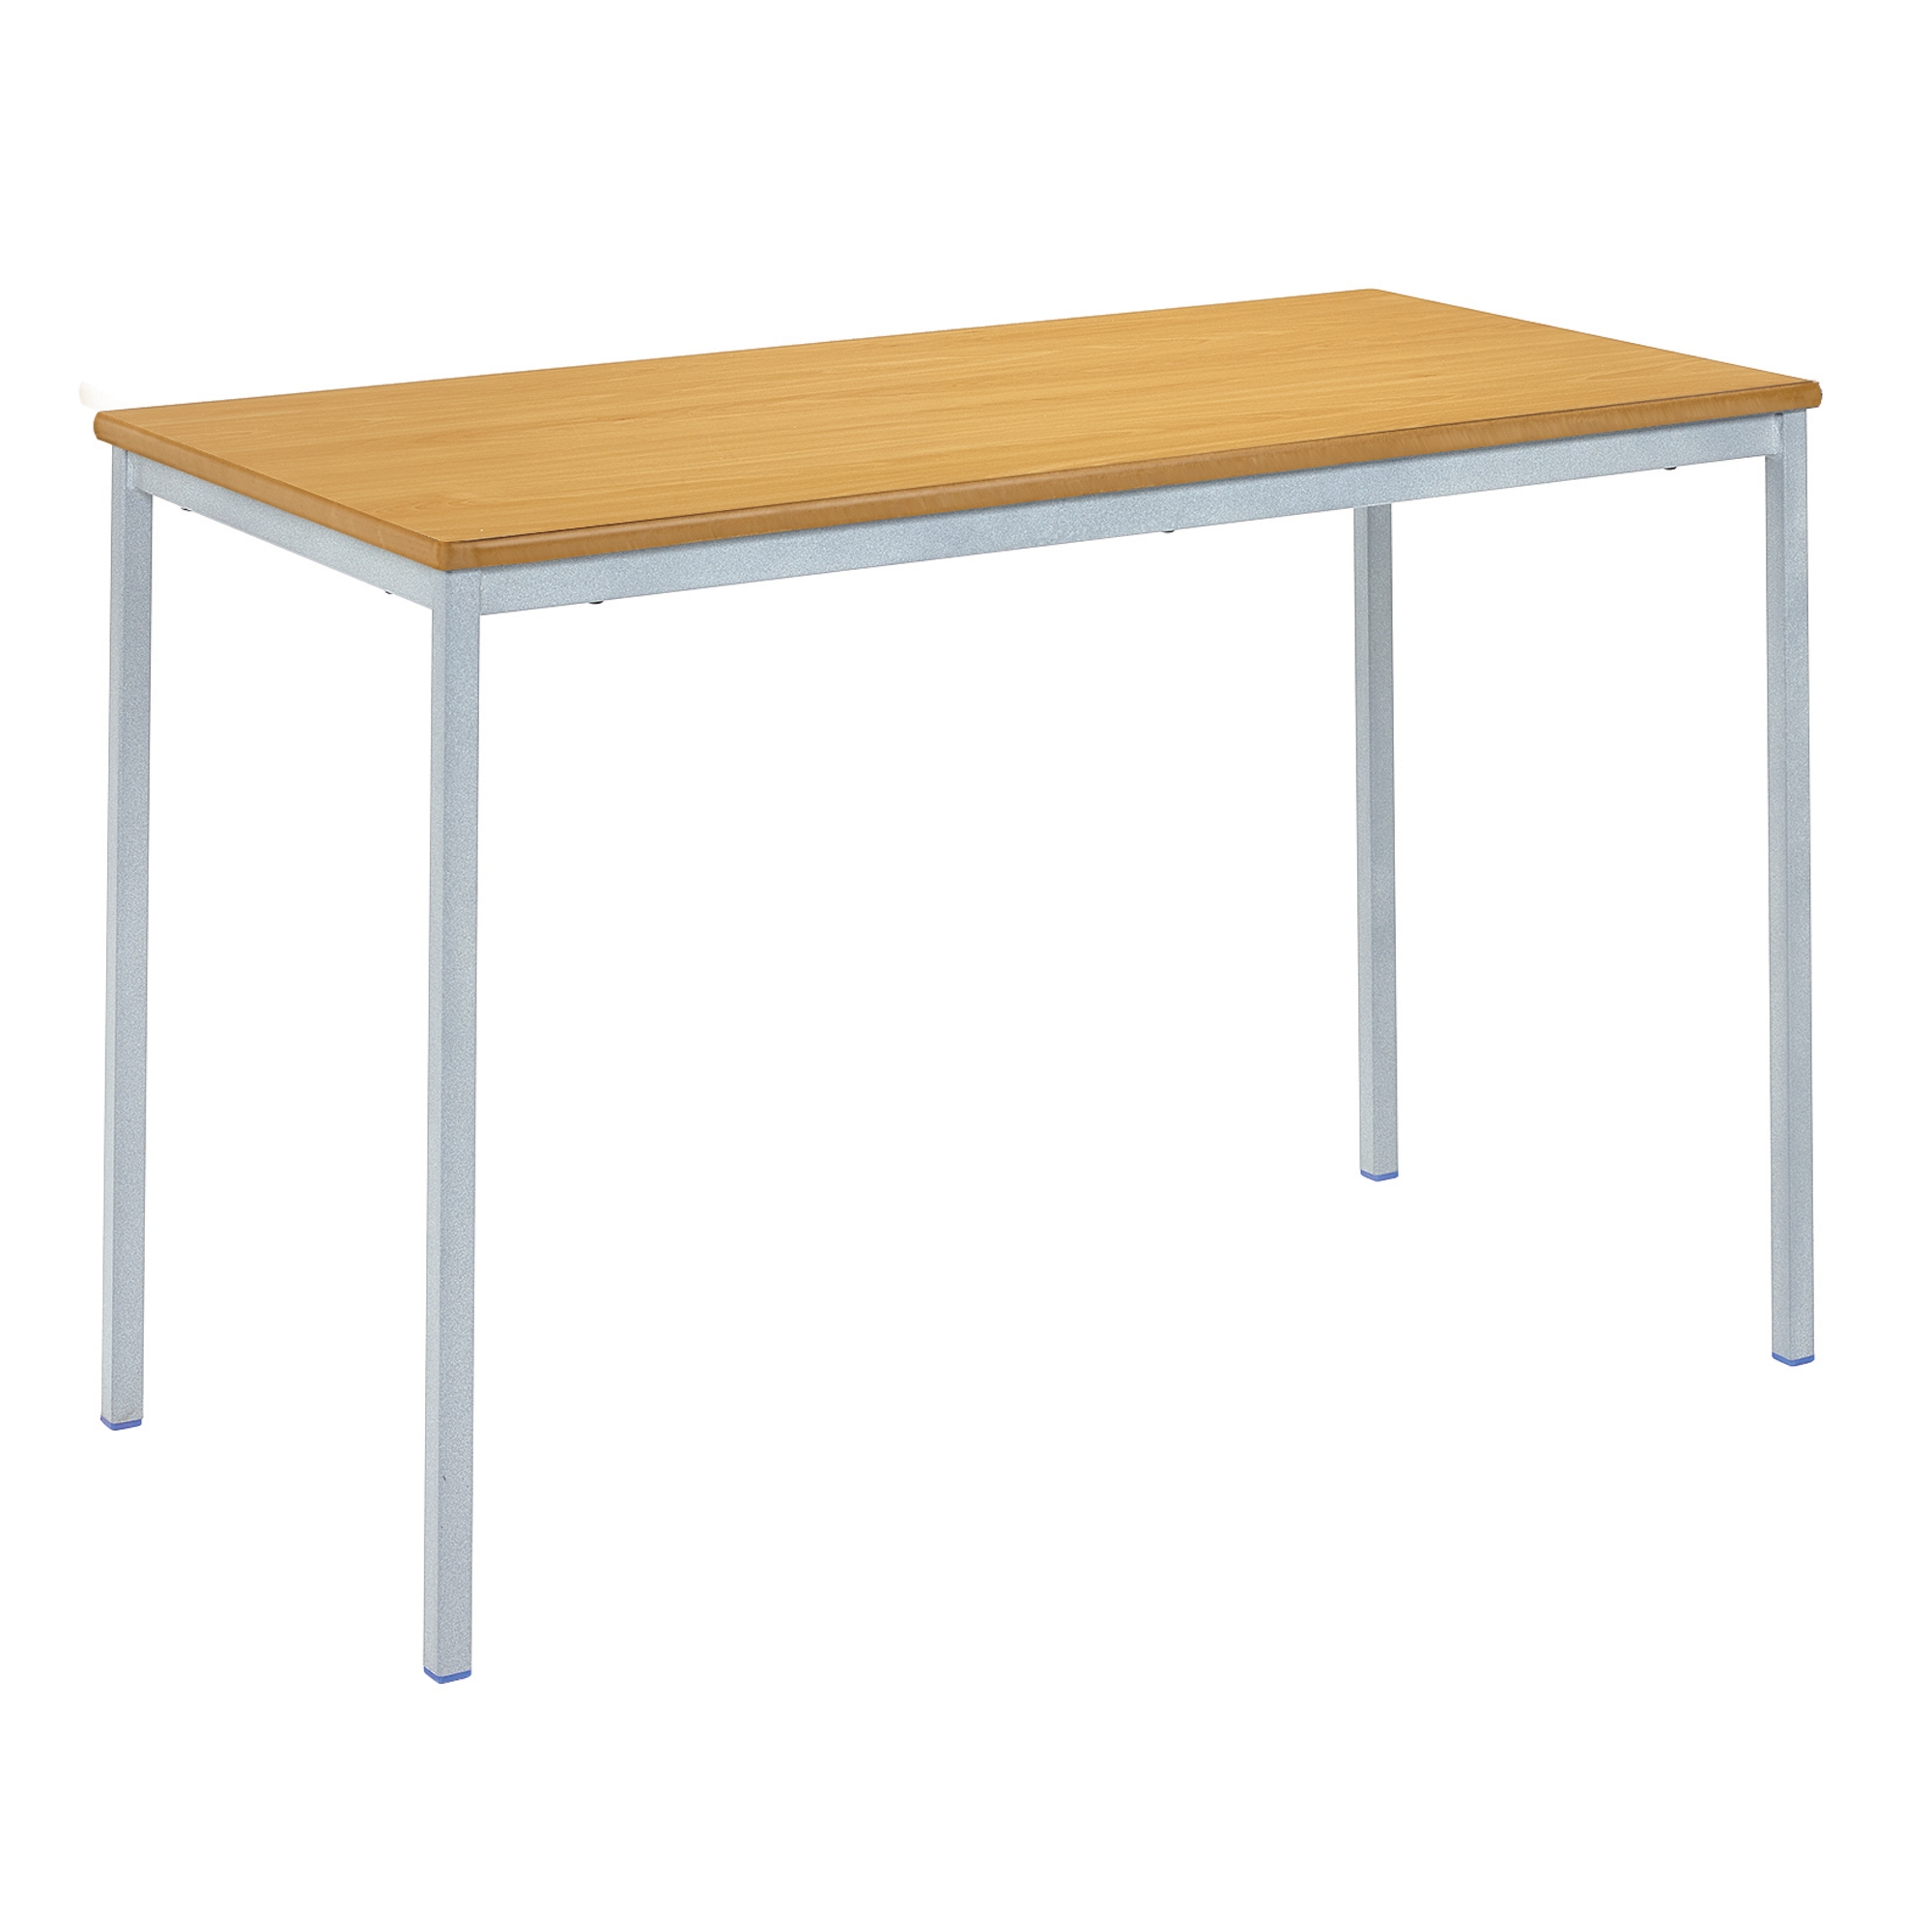 Classmates Rectangular Fully Welded Classroom Table - 1200 x 600 x 640mm - Beech